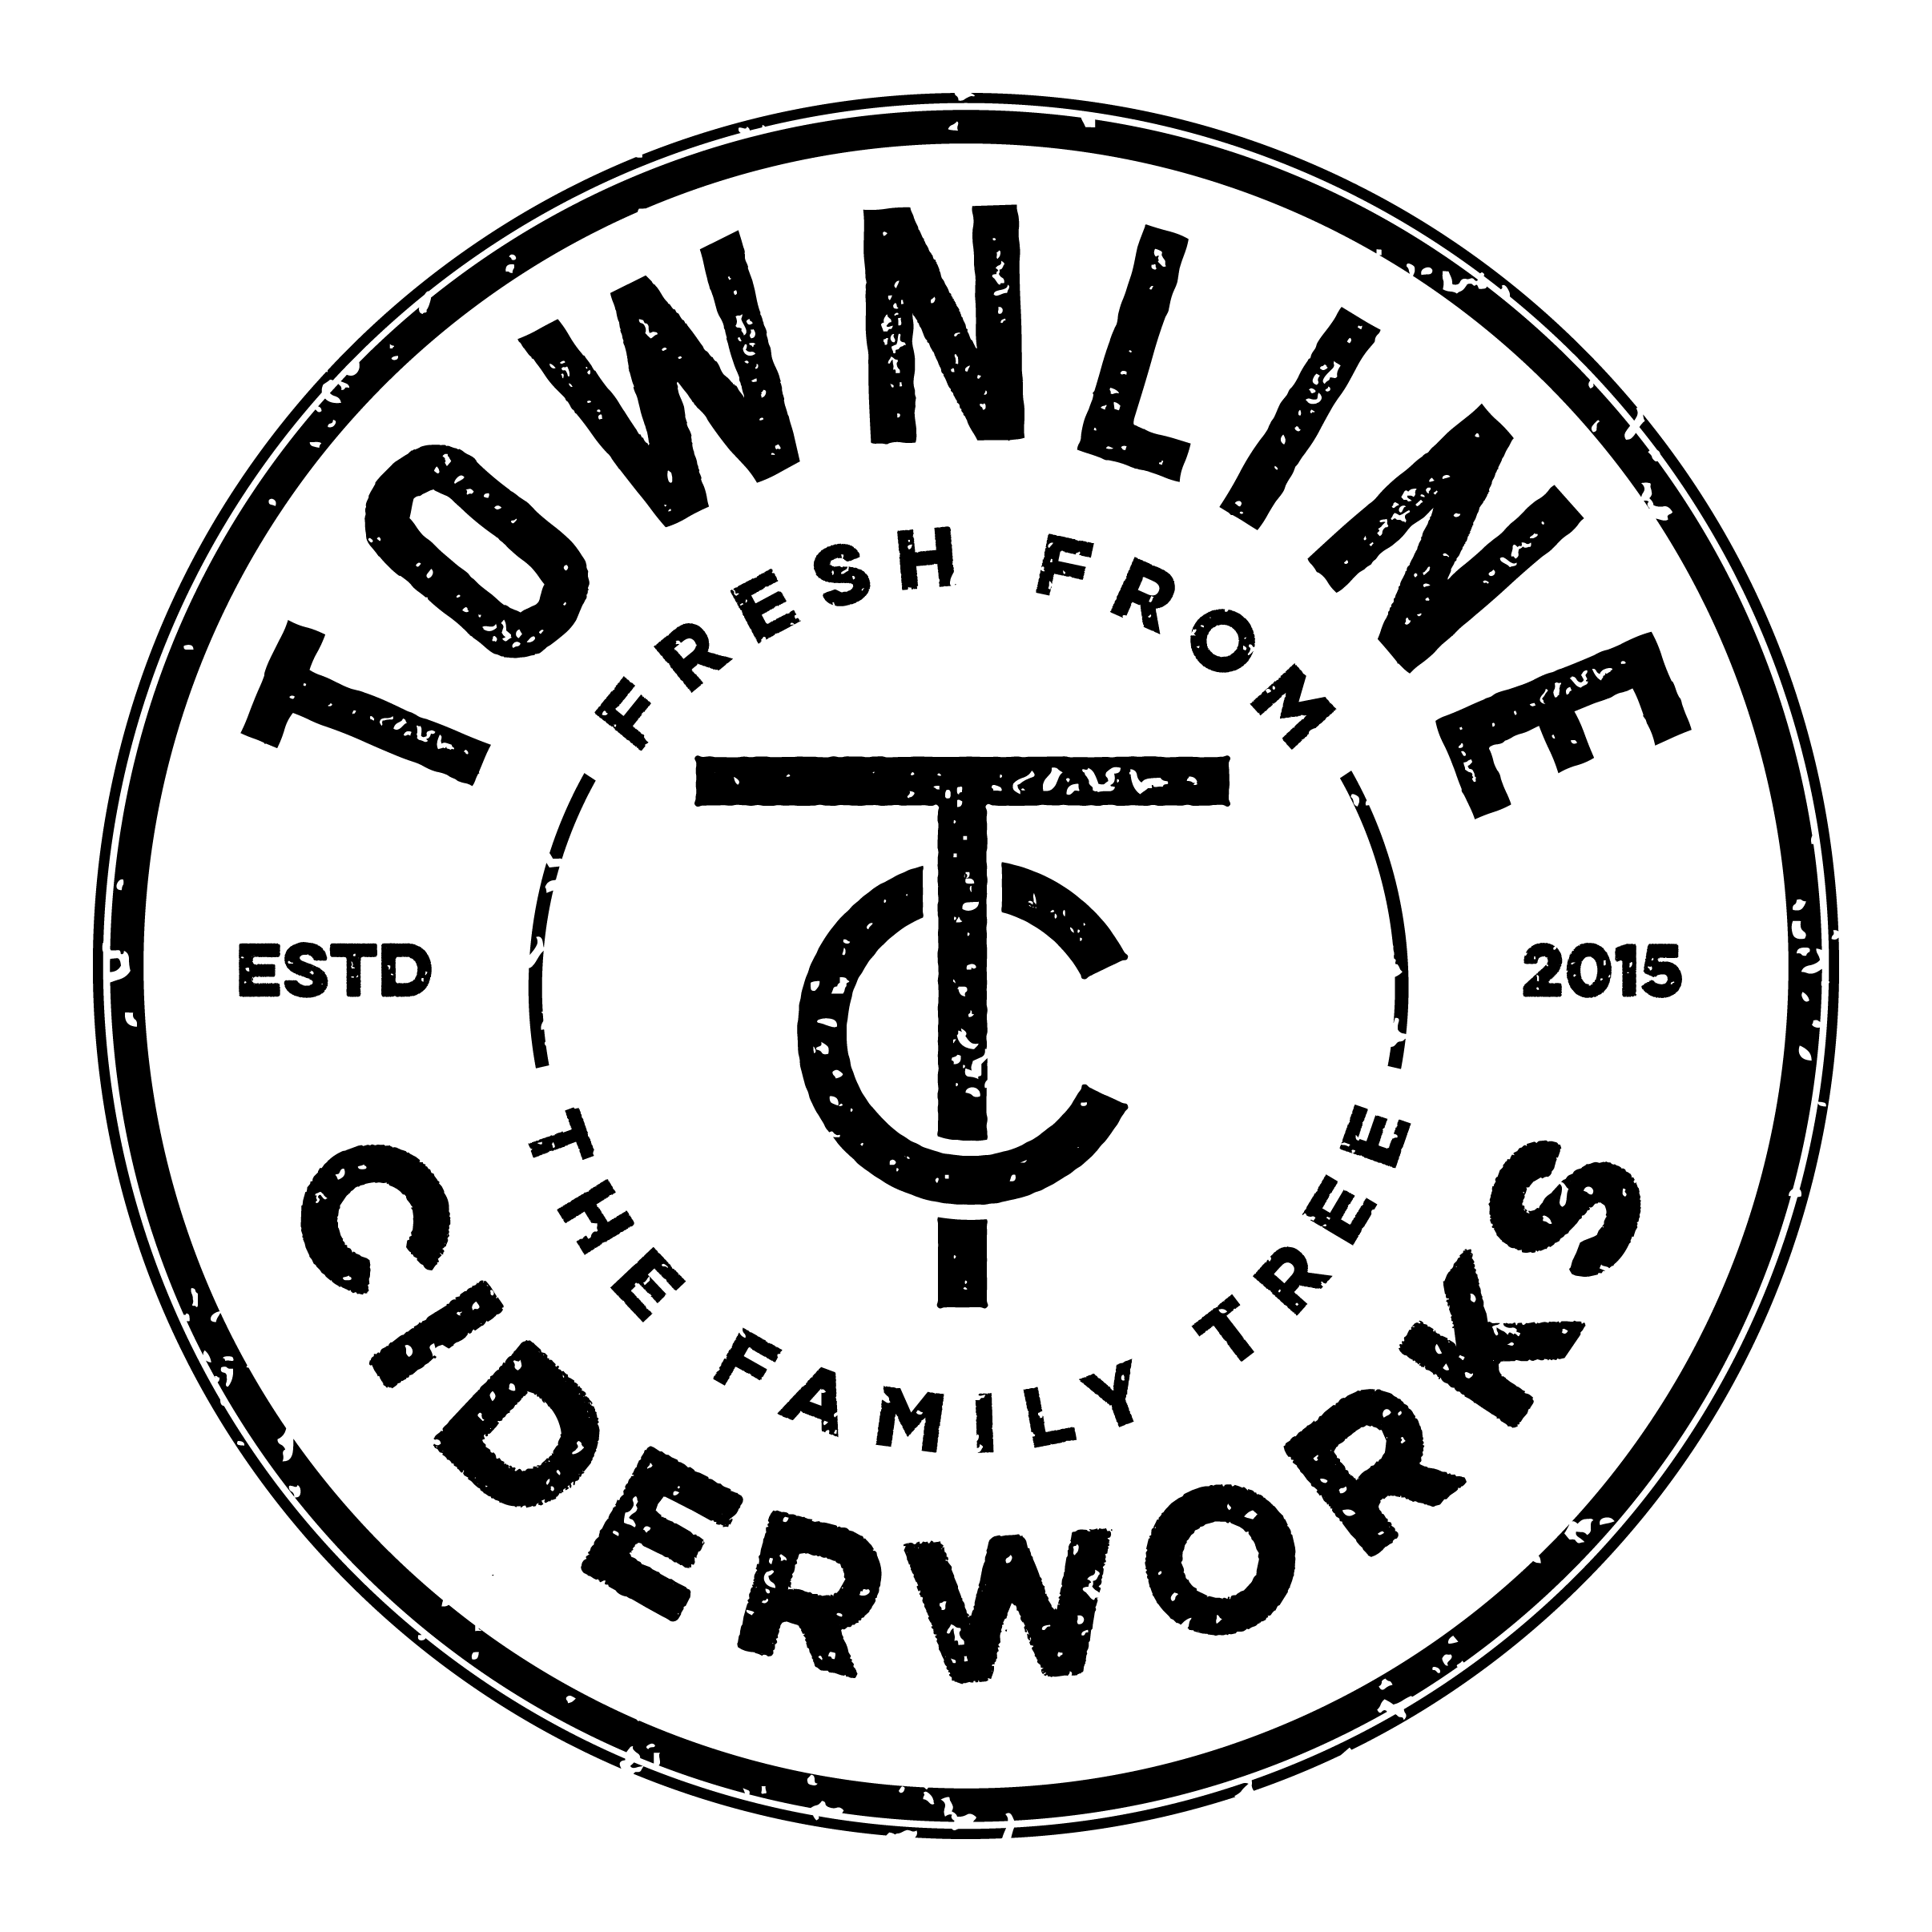 Townline Ciderworks